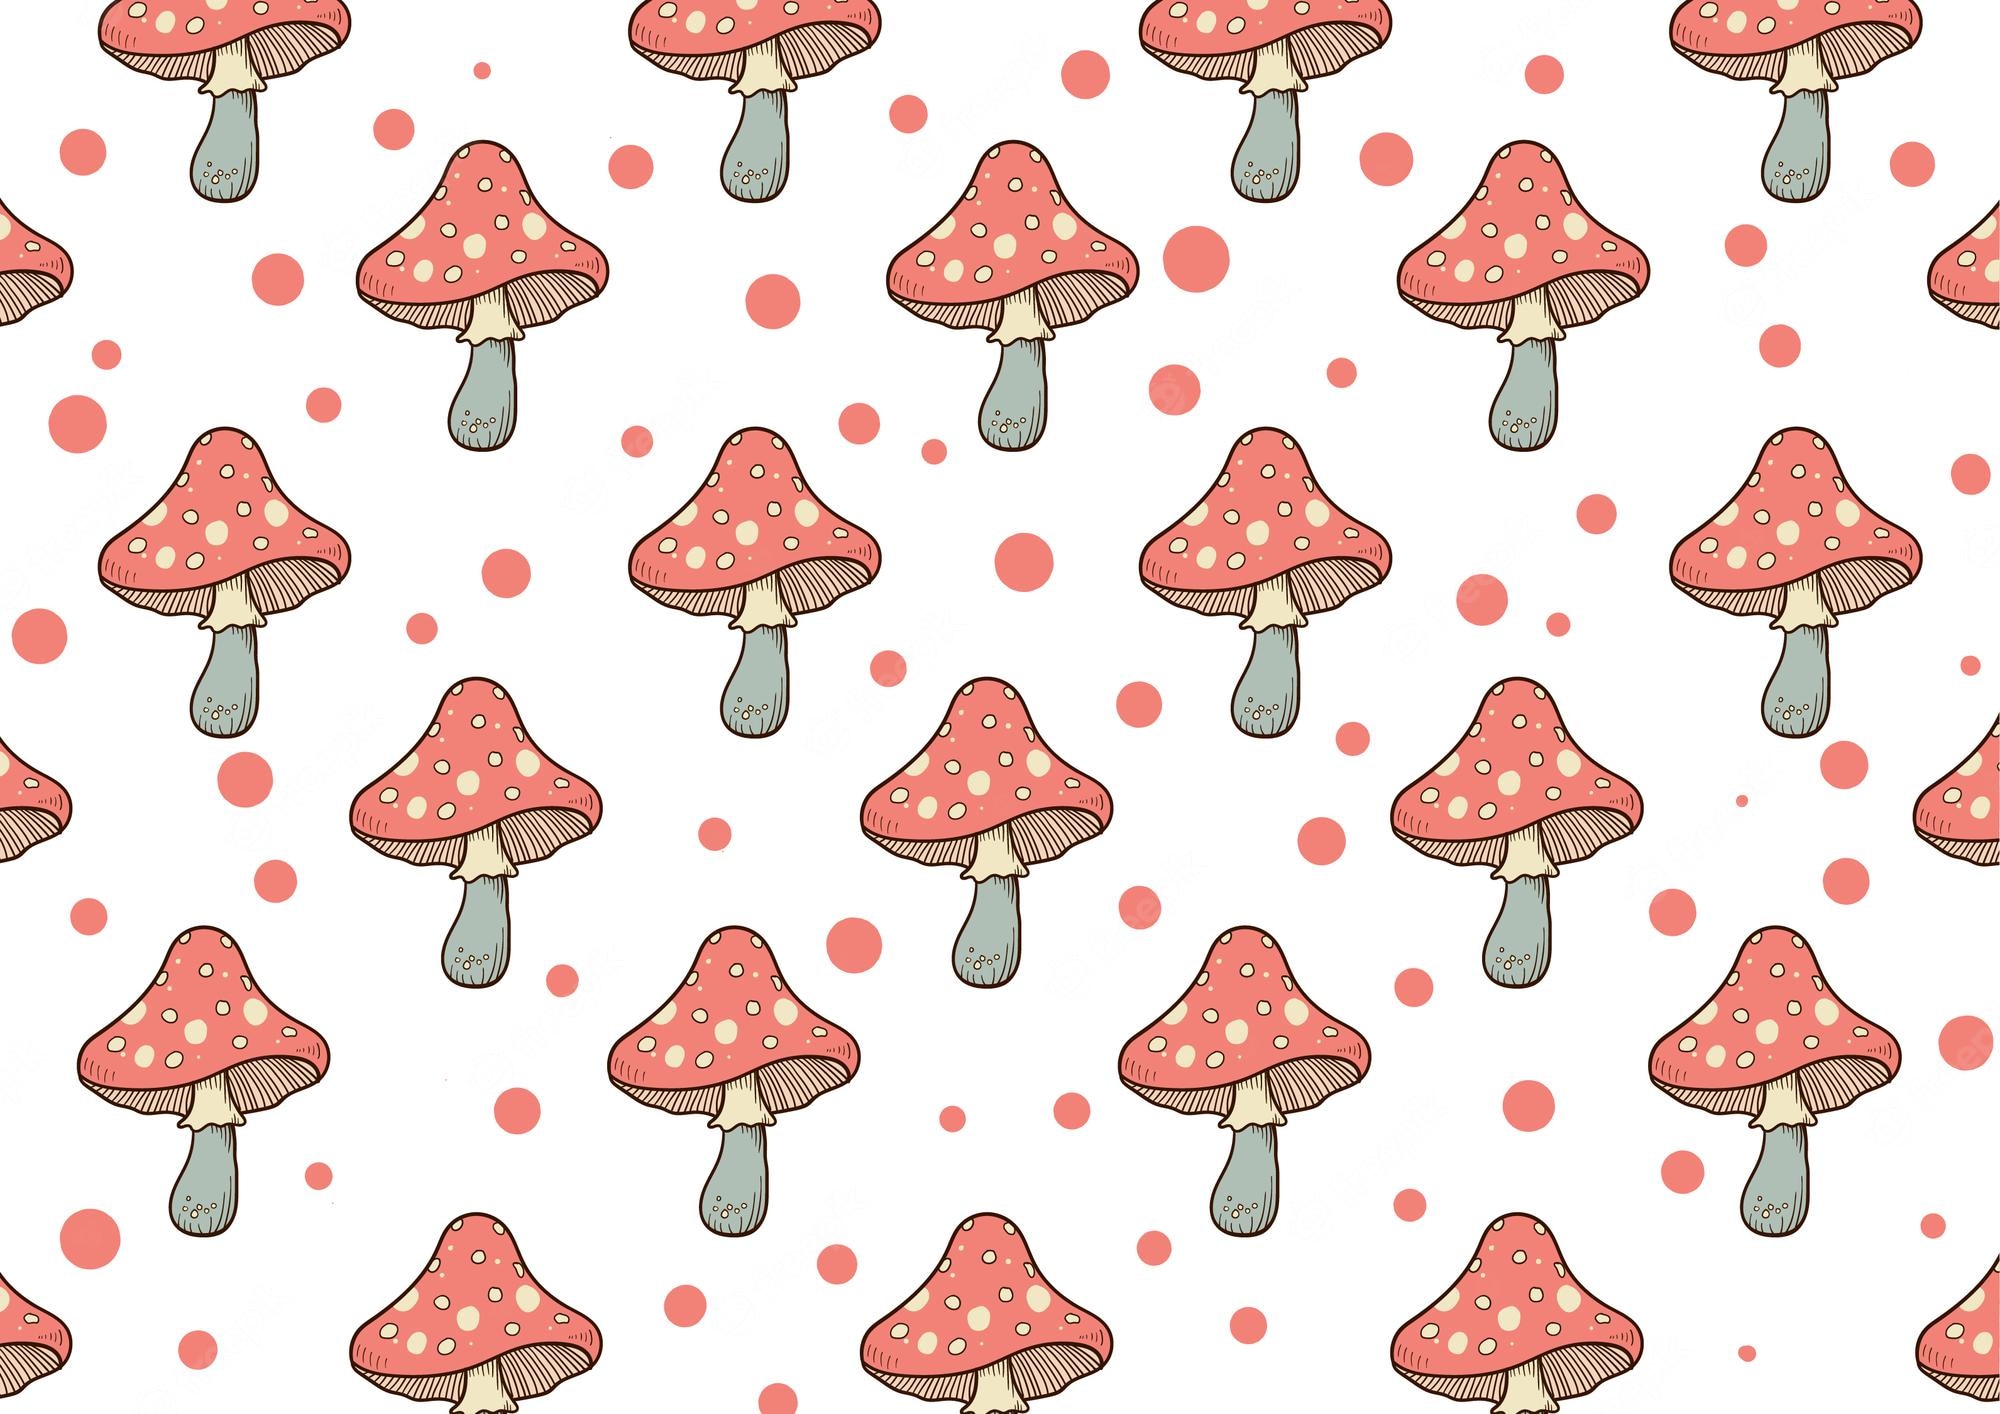 Free download wallpaper i guess Mushroom wallpaper Iphone ...